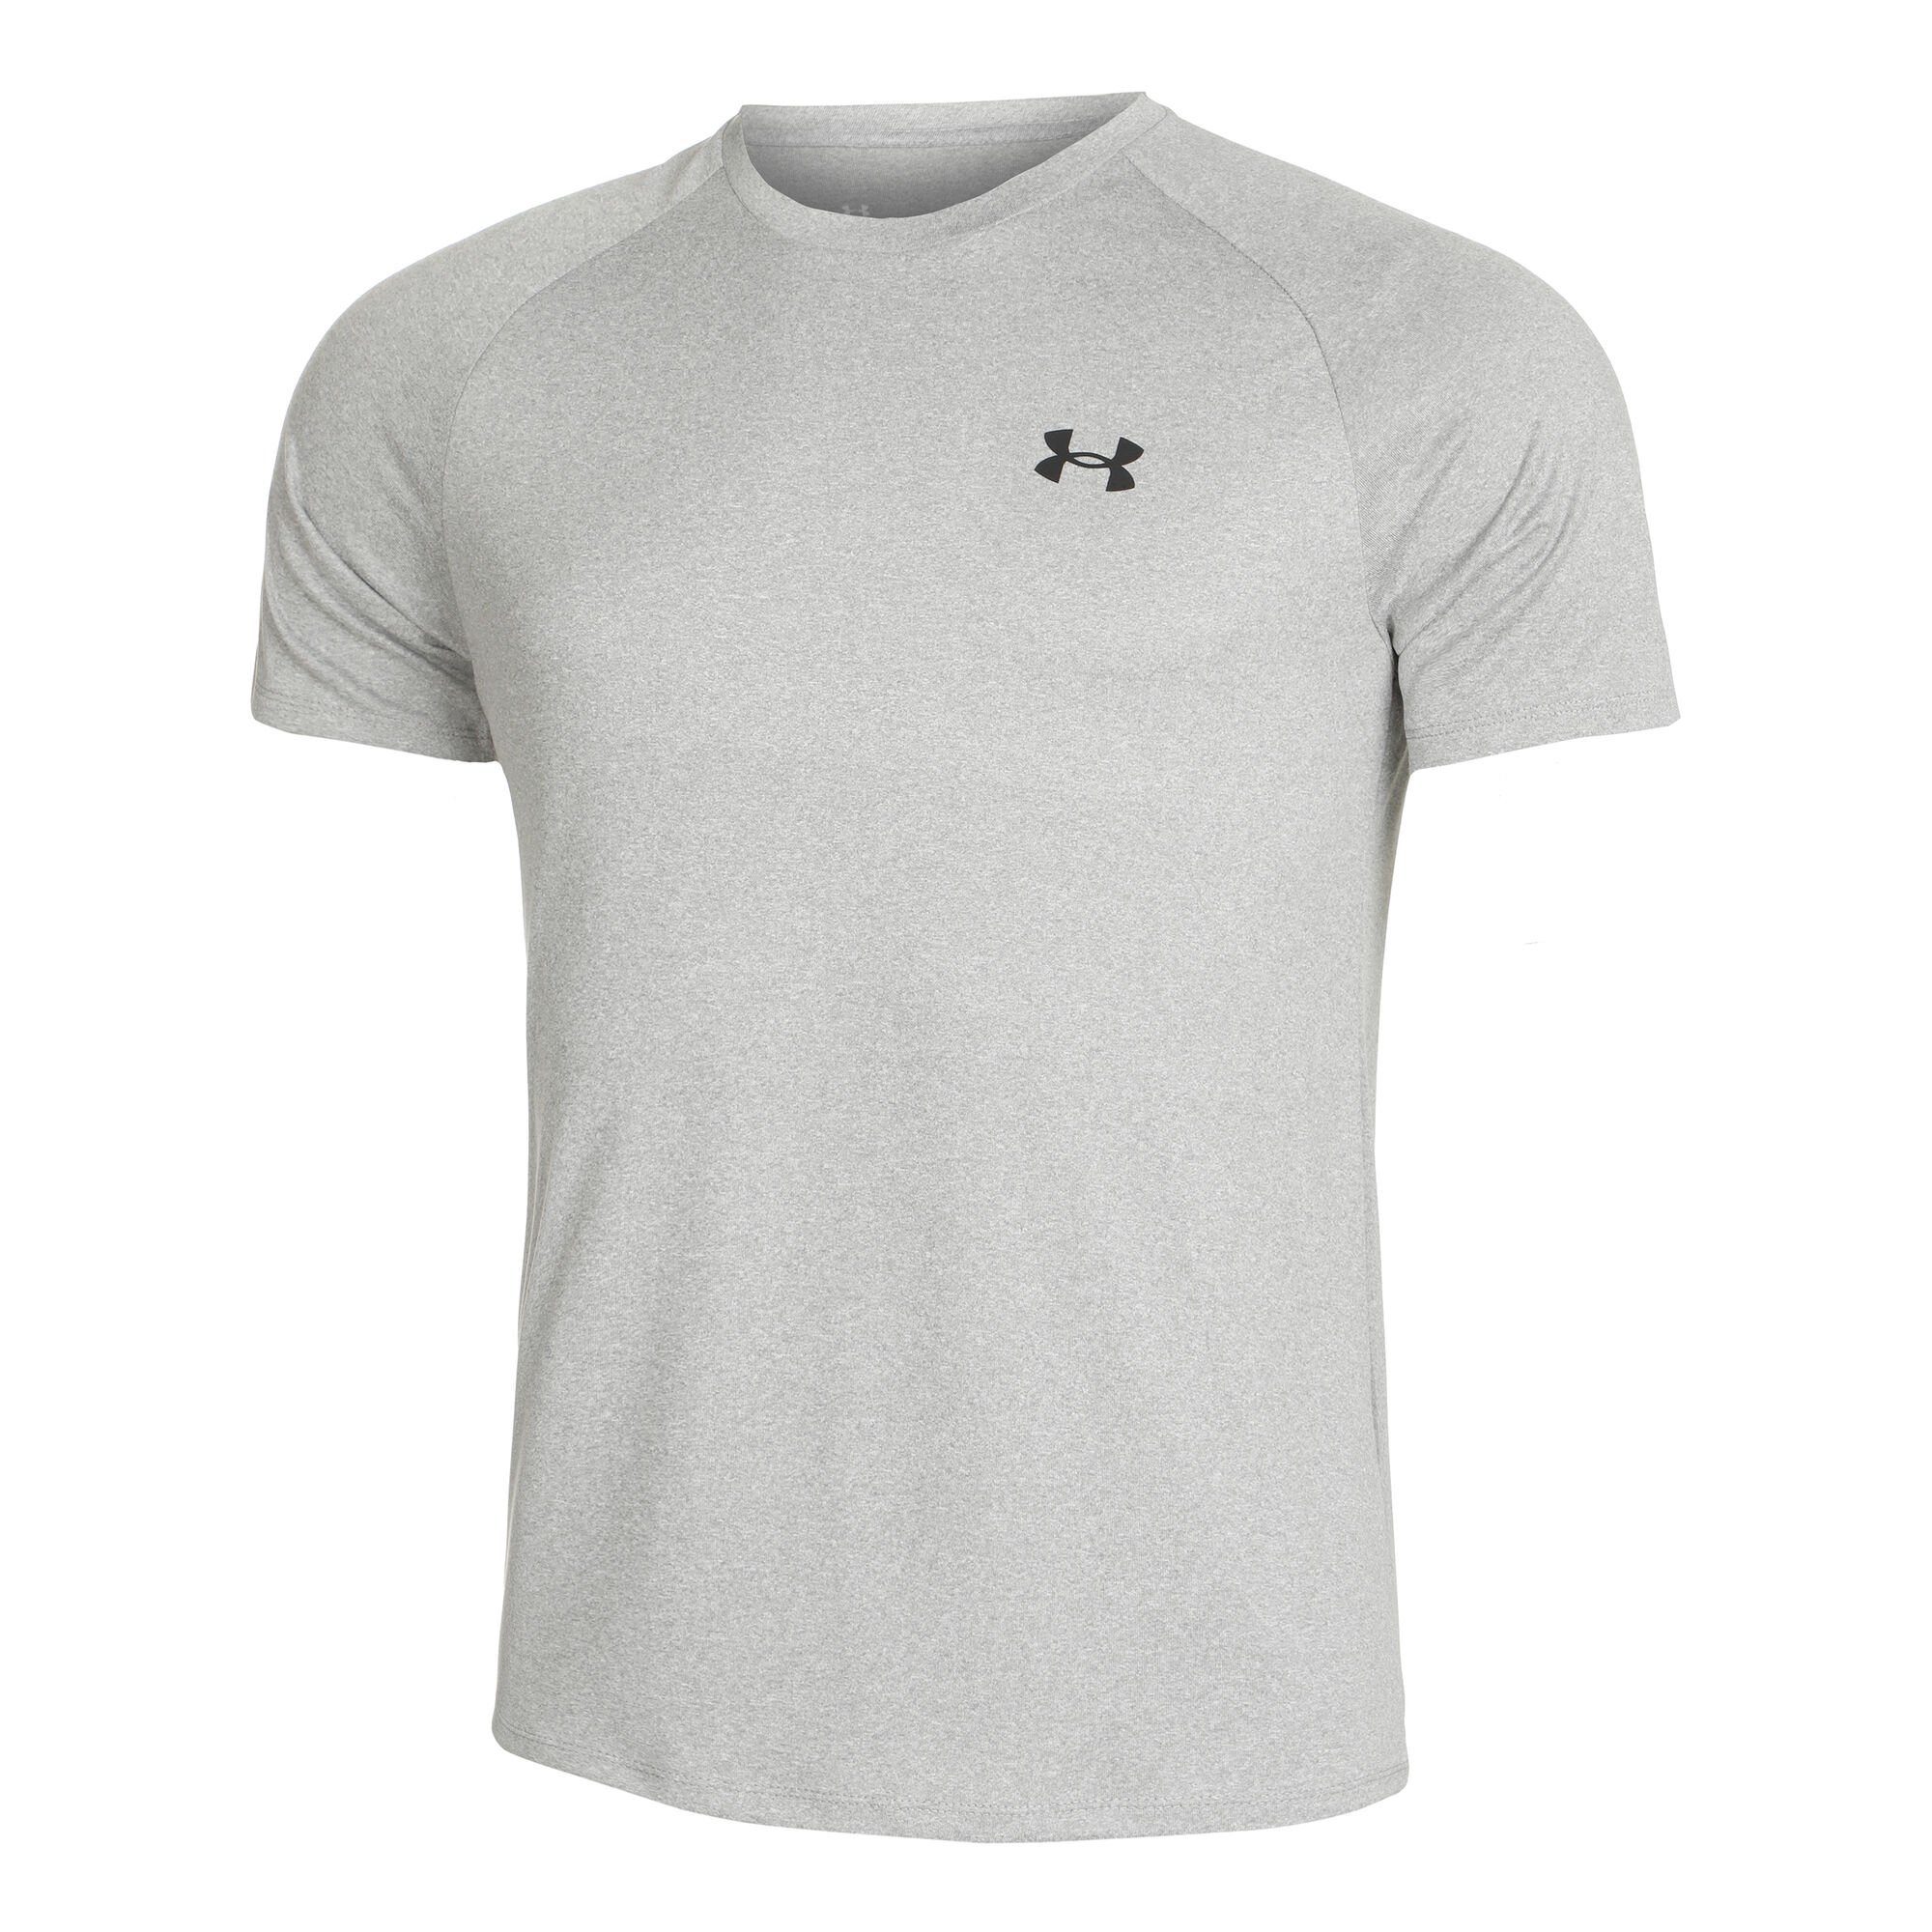 Buy Under Armour Tech 2.0 T-Shirt Men Grey, Black online